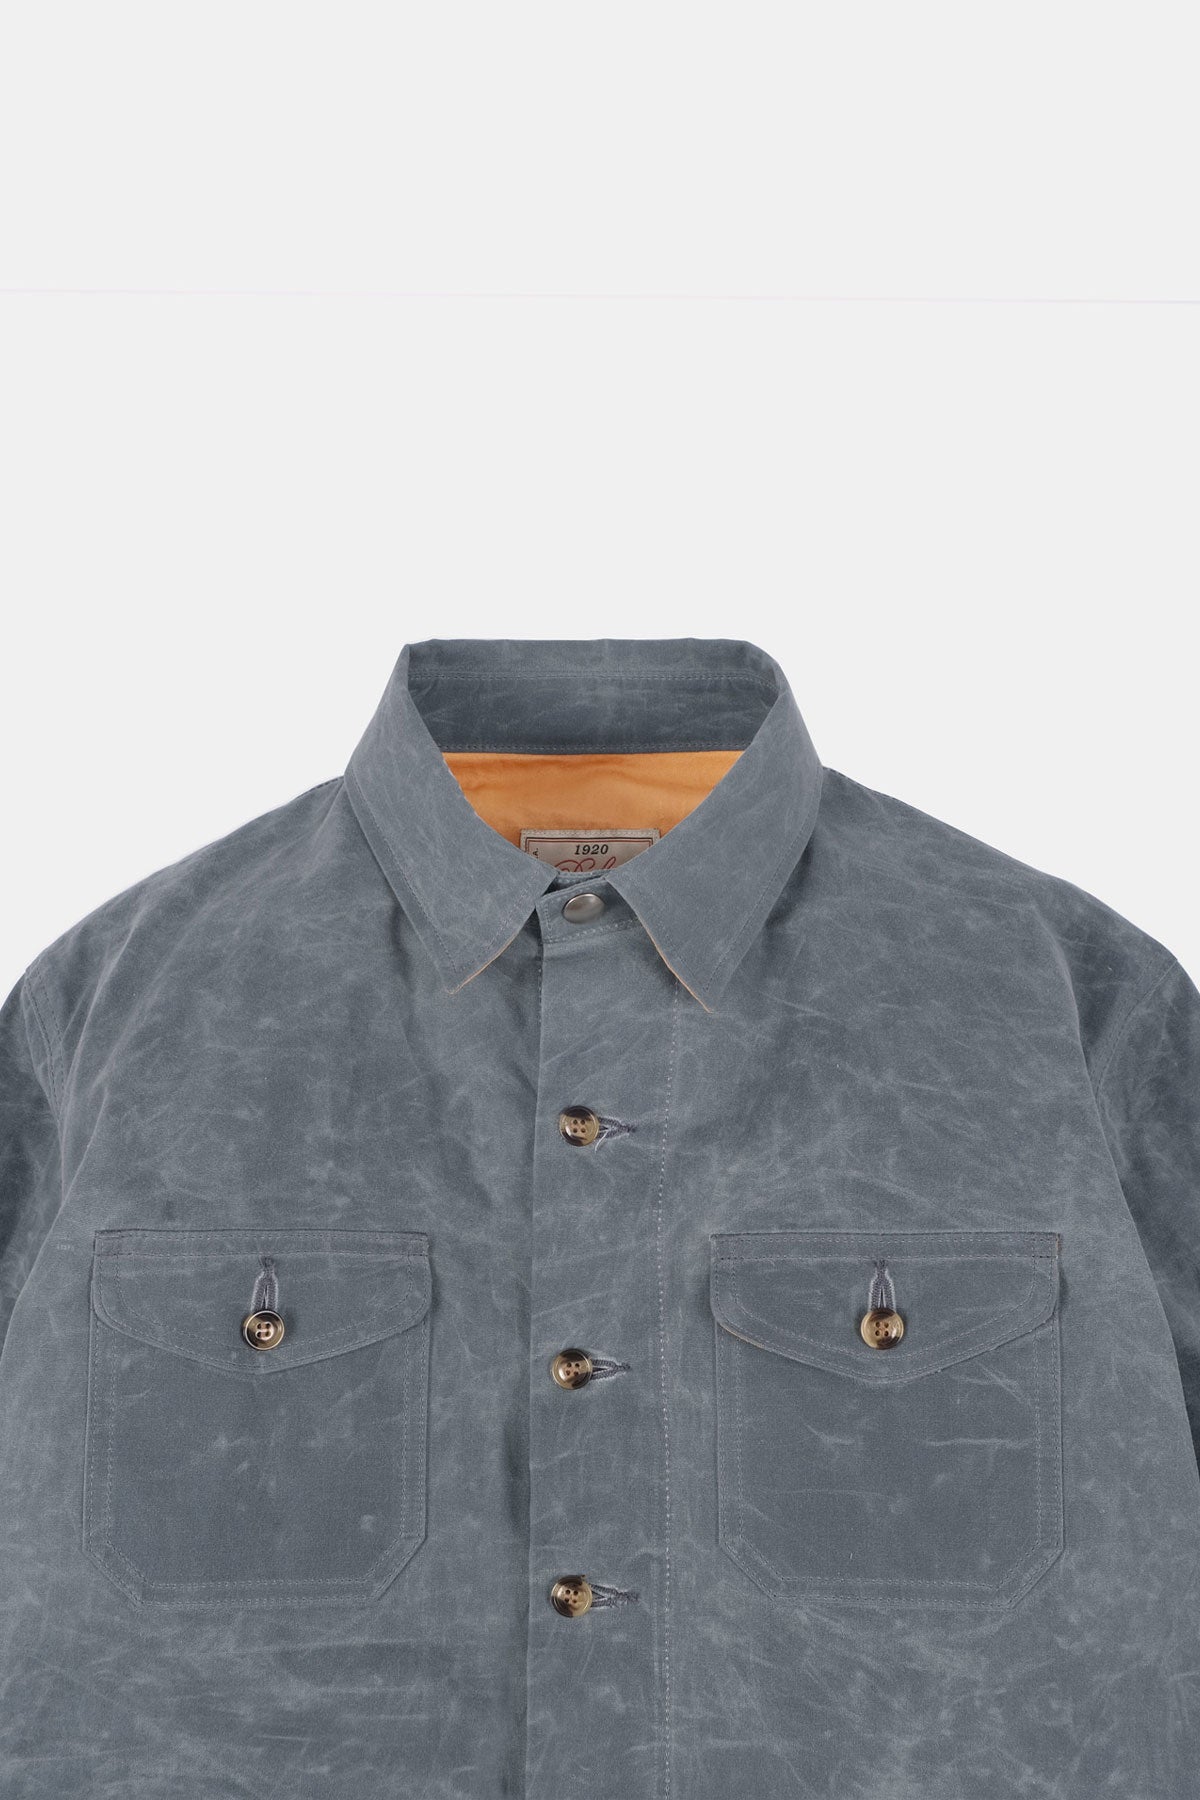 Dehen1920 - Crissman Overshirt in Harbour Blue Waxed Cotton